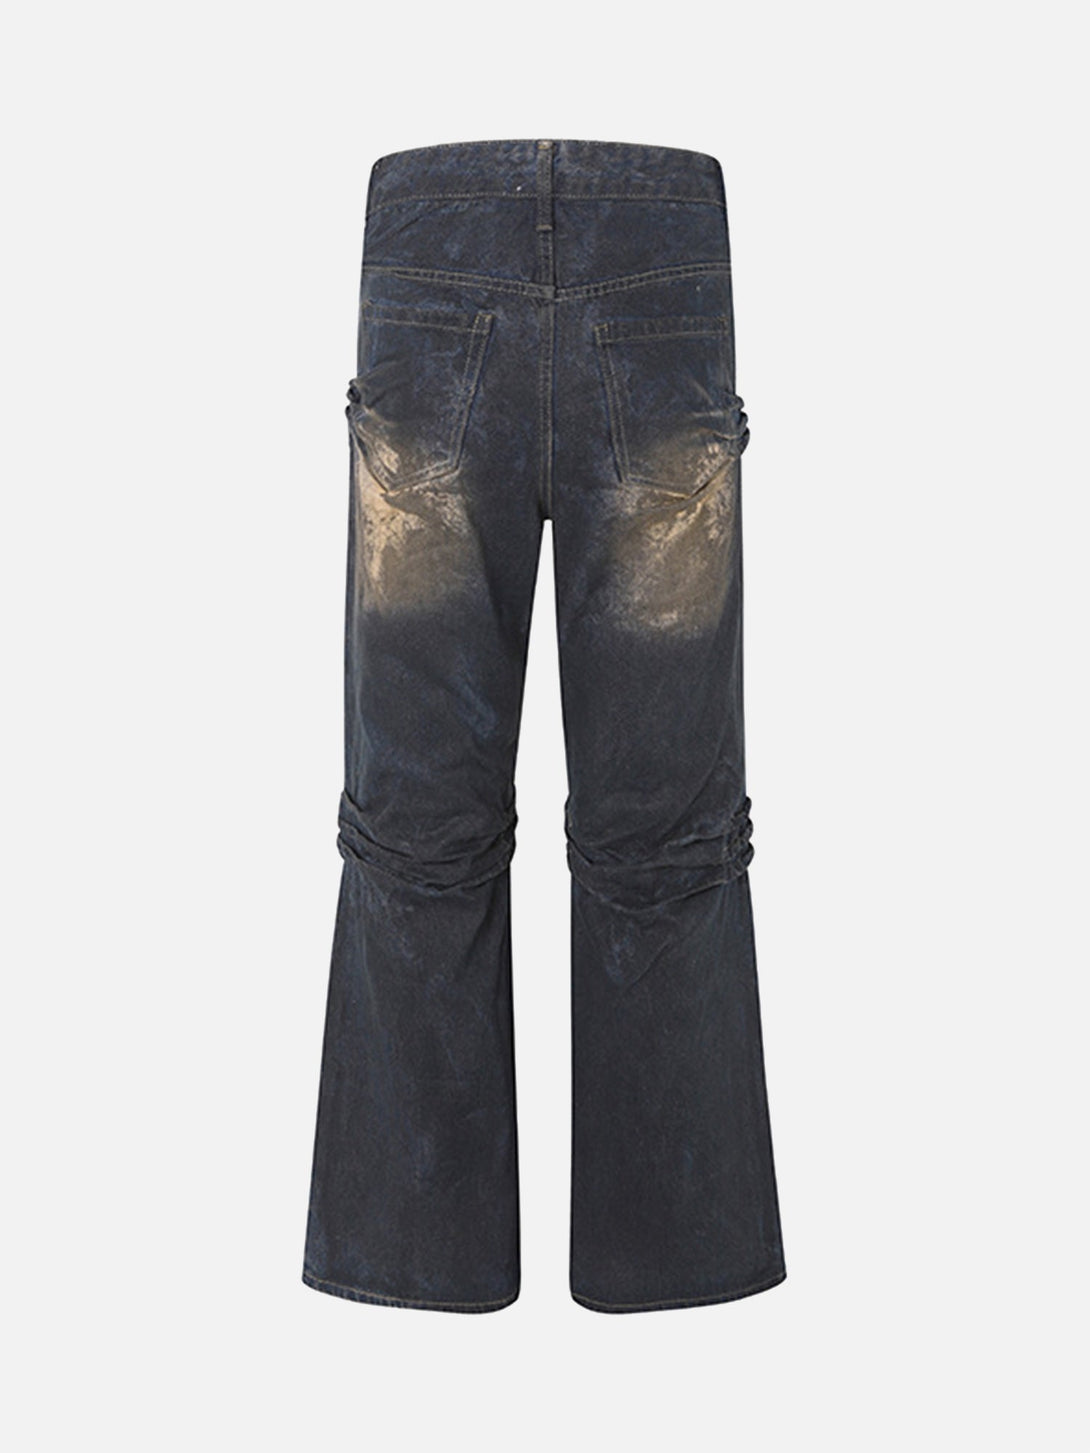 Majesda® - American High Street Heavy Duty Washed Jeans- Outfit Ideas - Streetwear Fashion - majesda.com